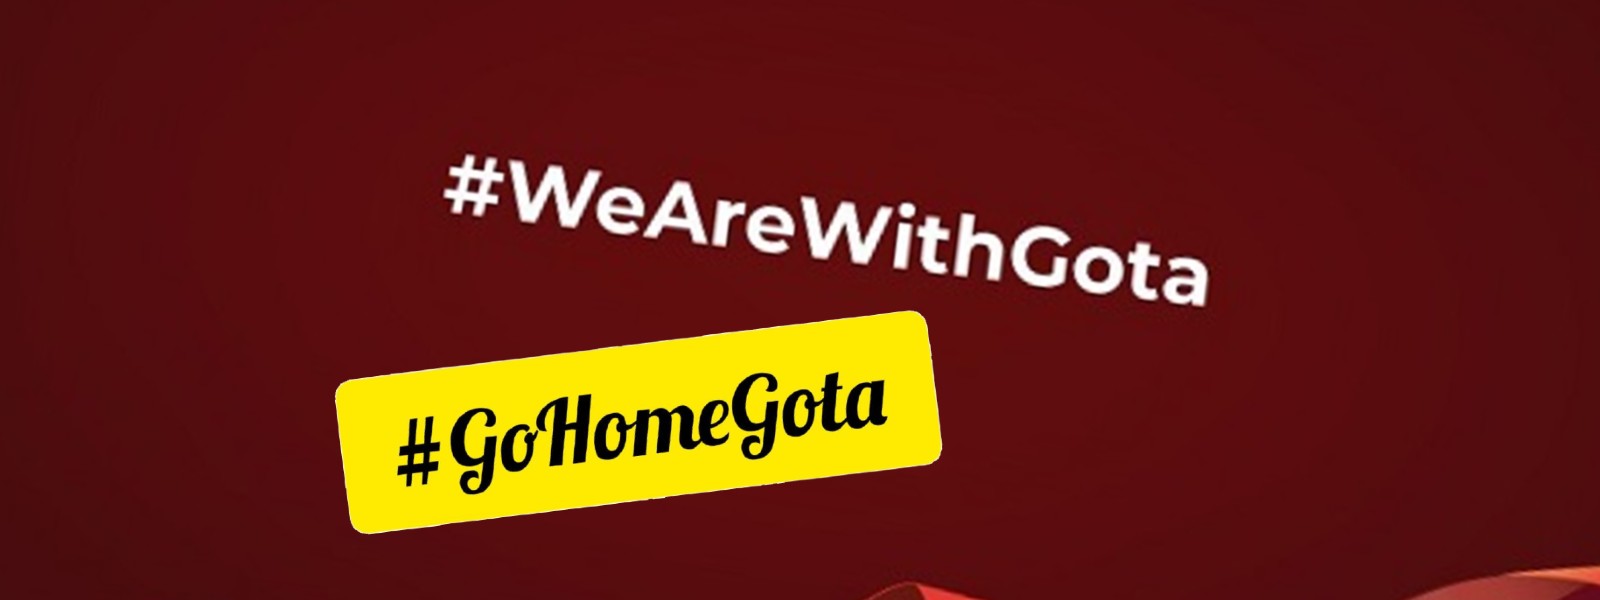 Battle of the #hashtags : #GoHomeGota vs #WeAreWithGota